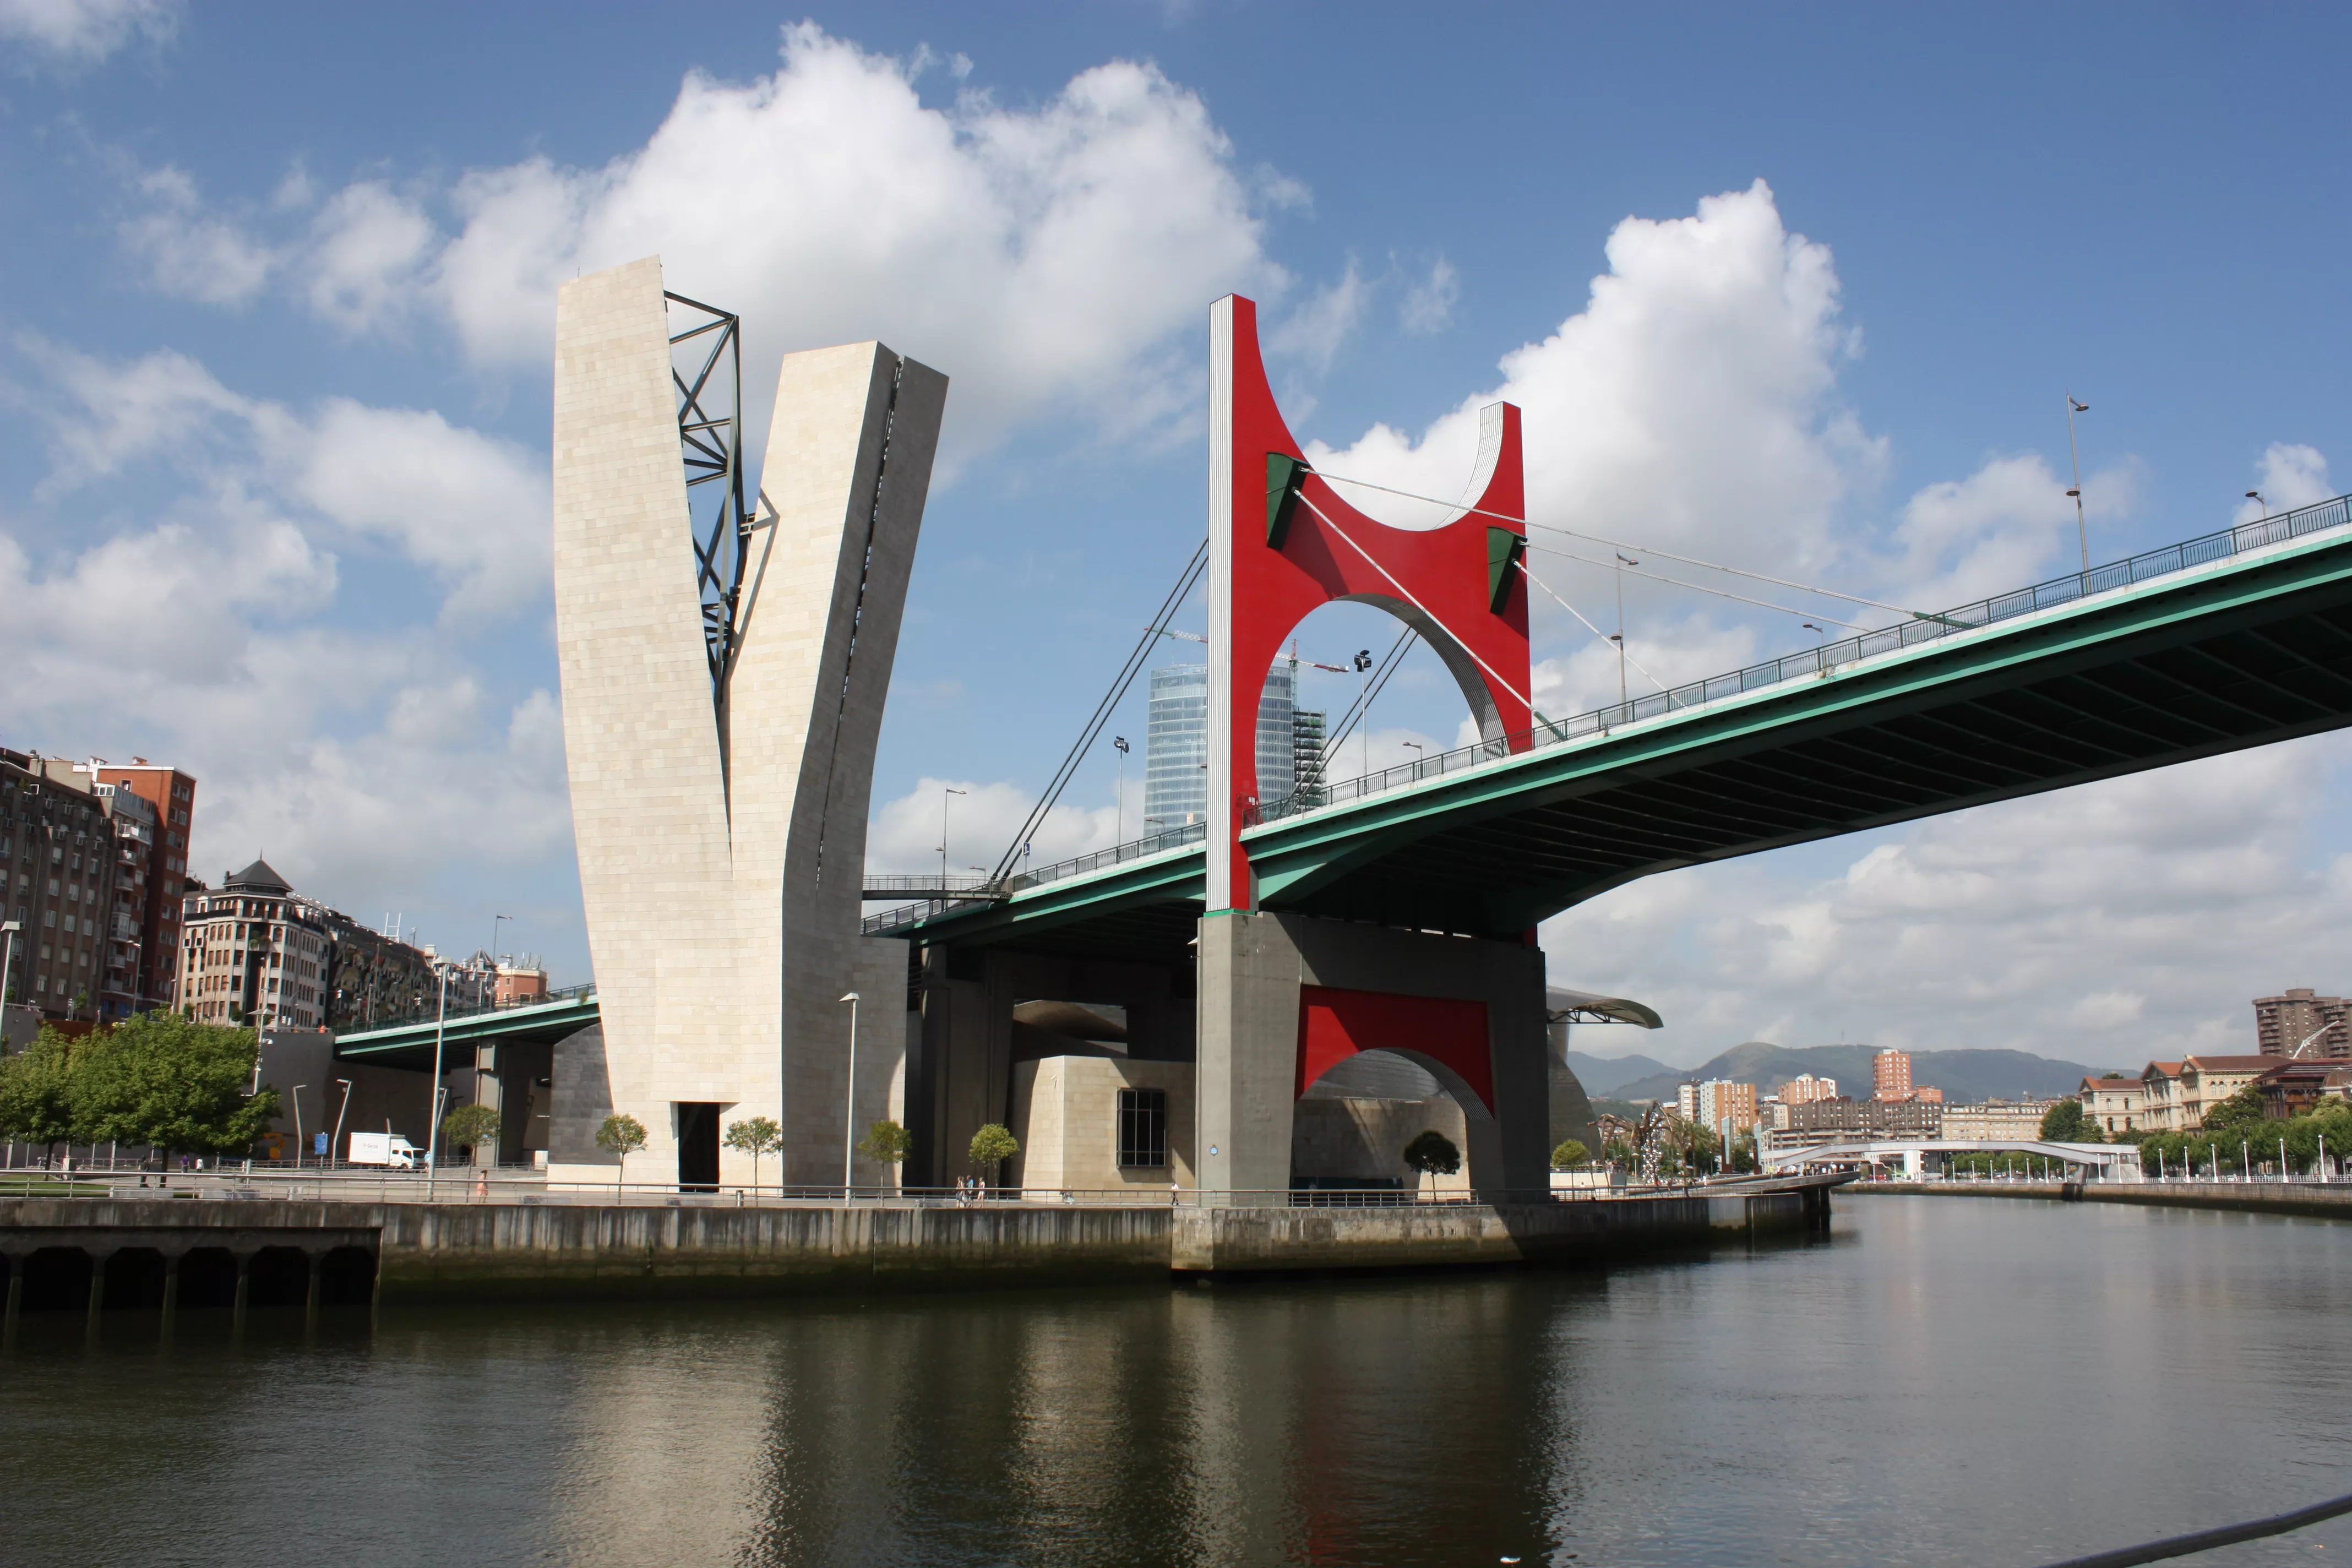 La Salve Bridge in Spain, Europe | Architecture - Rated 3.6